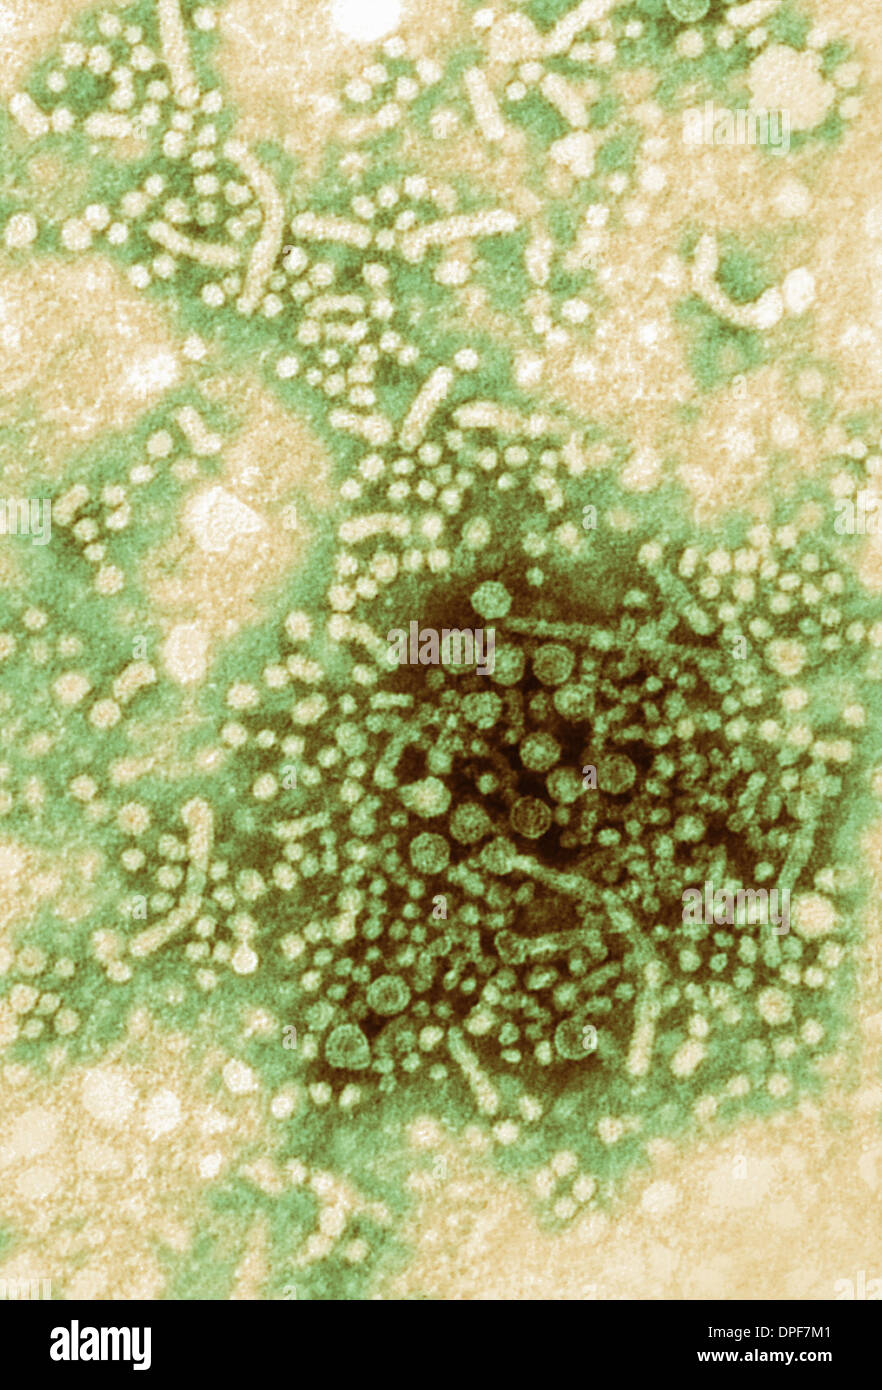 TEM showing hepatitis B virus particles Stock Photo